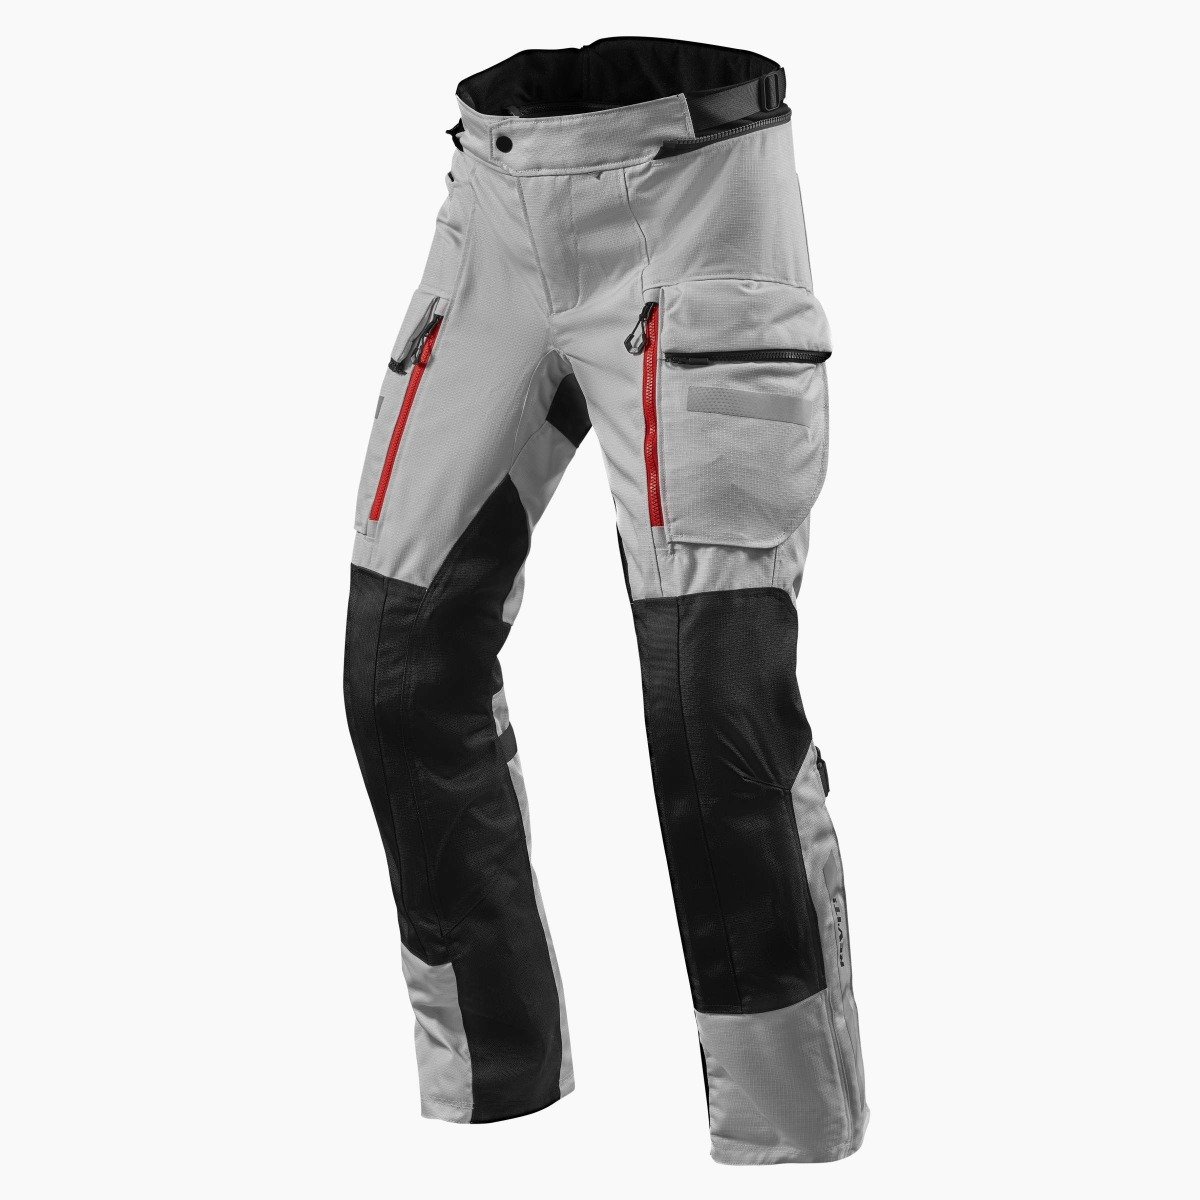 Image of REV'IT! Sand 4 H2O Long Silver Black Motorcycle Pants Size M EN